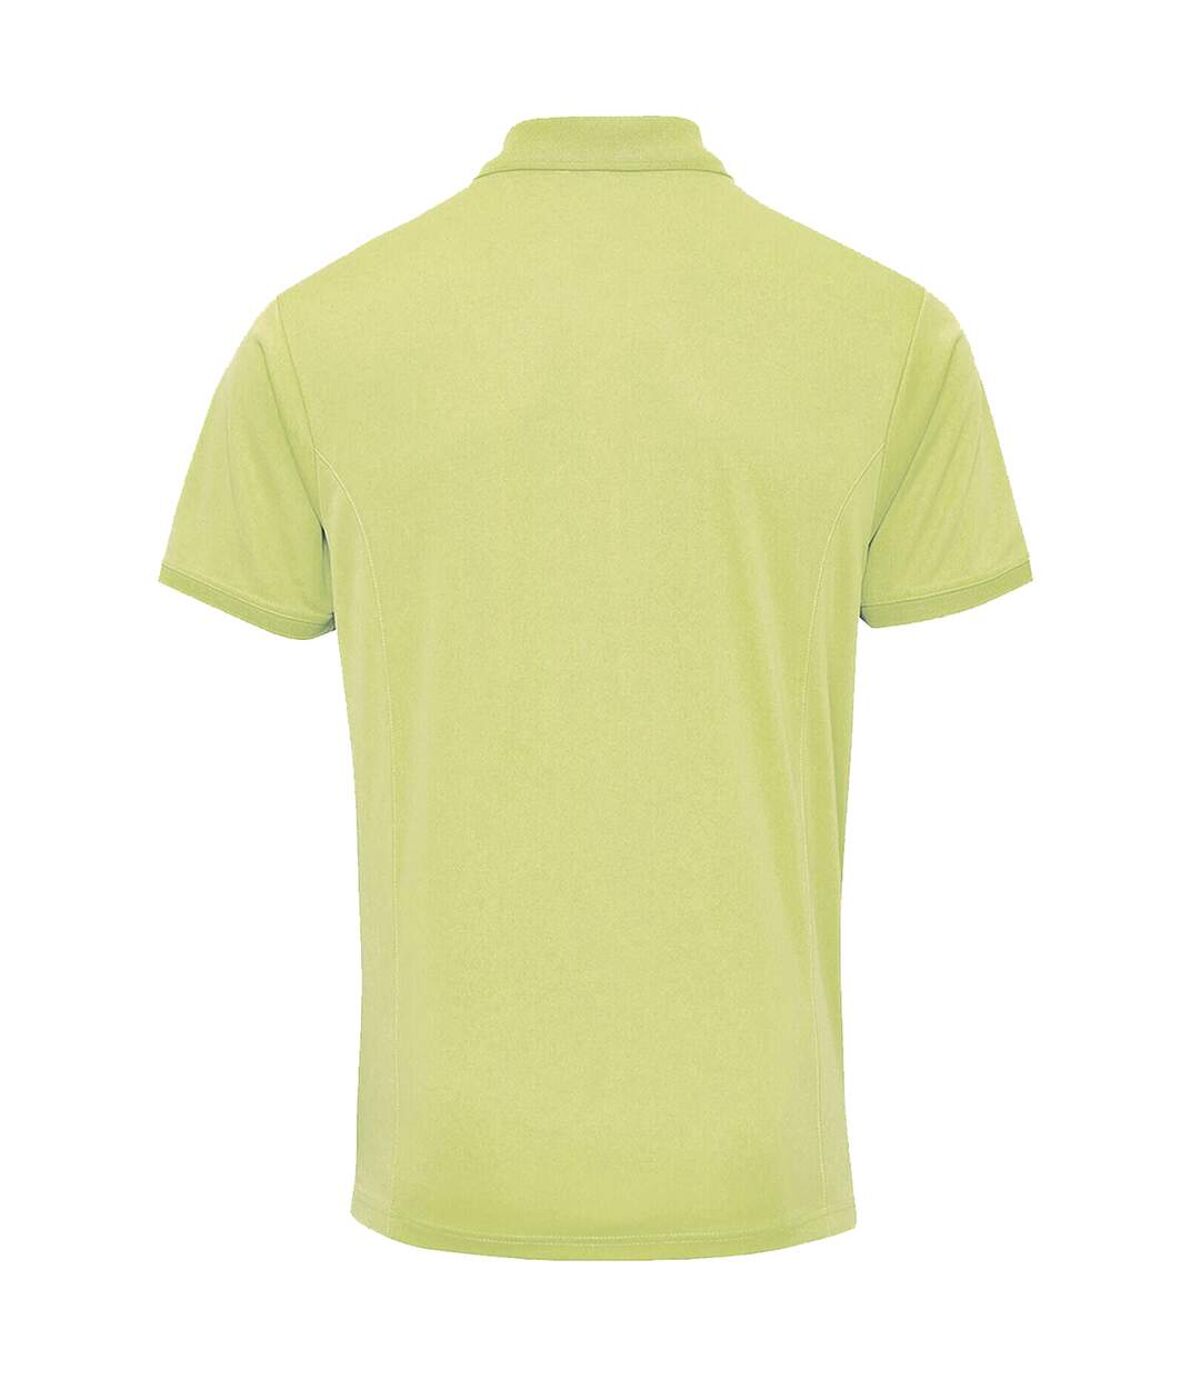 Premier Mens Coolchecker Pique Short Sleeve Polo T-Shirt (Red)